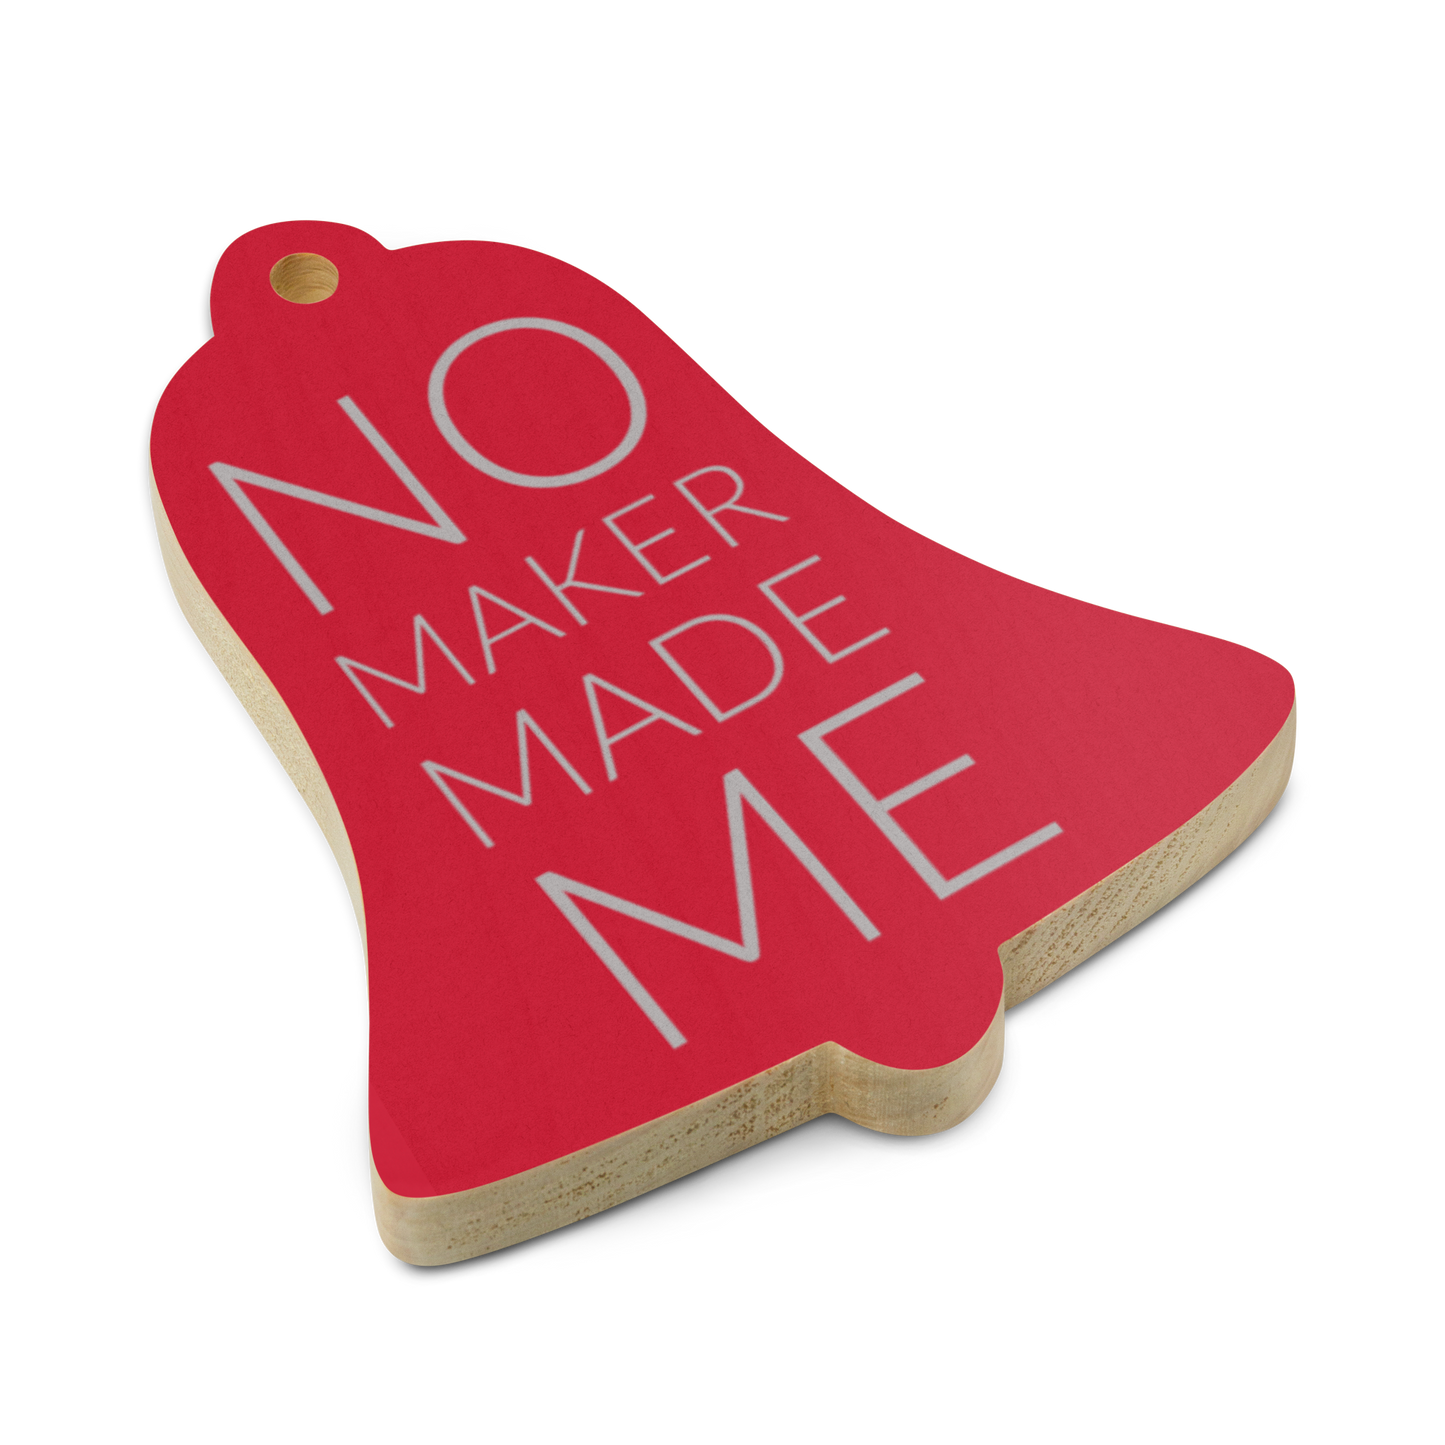 Wooden Ornament / Magnet - No Maker Made Me